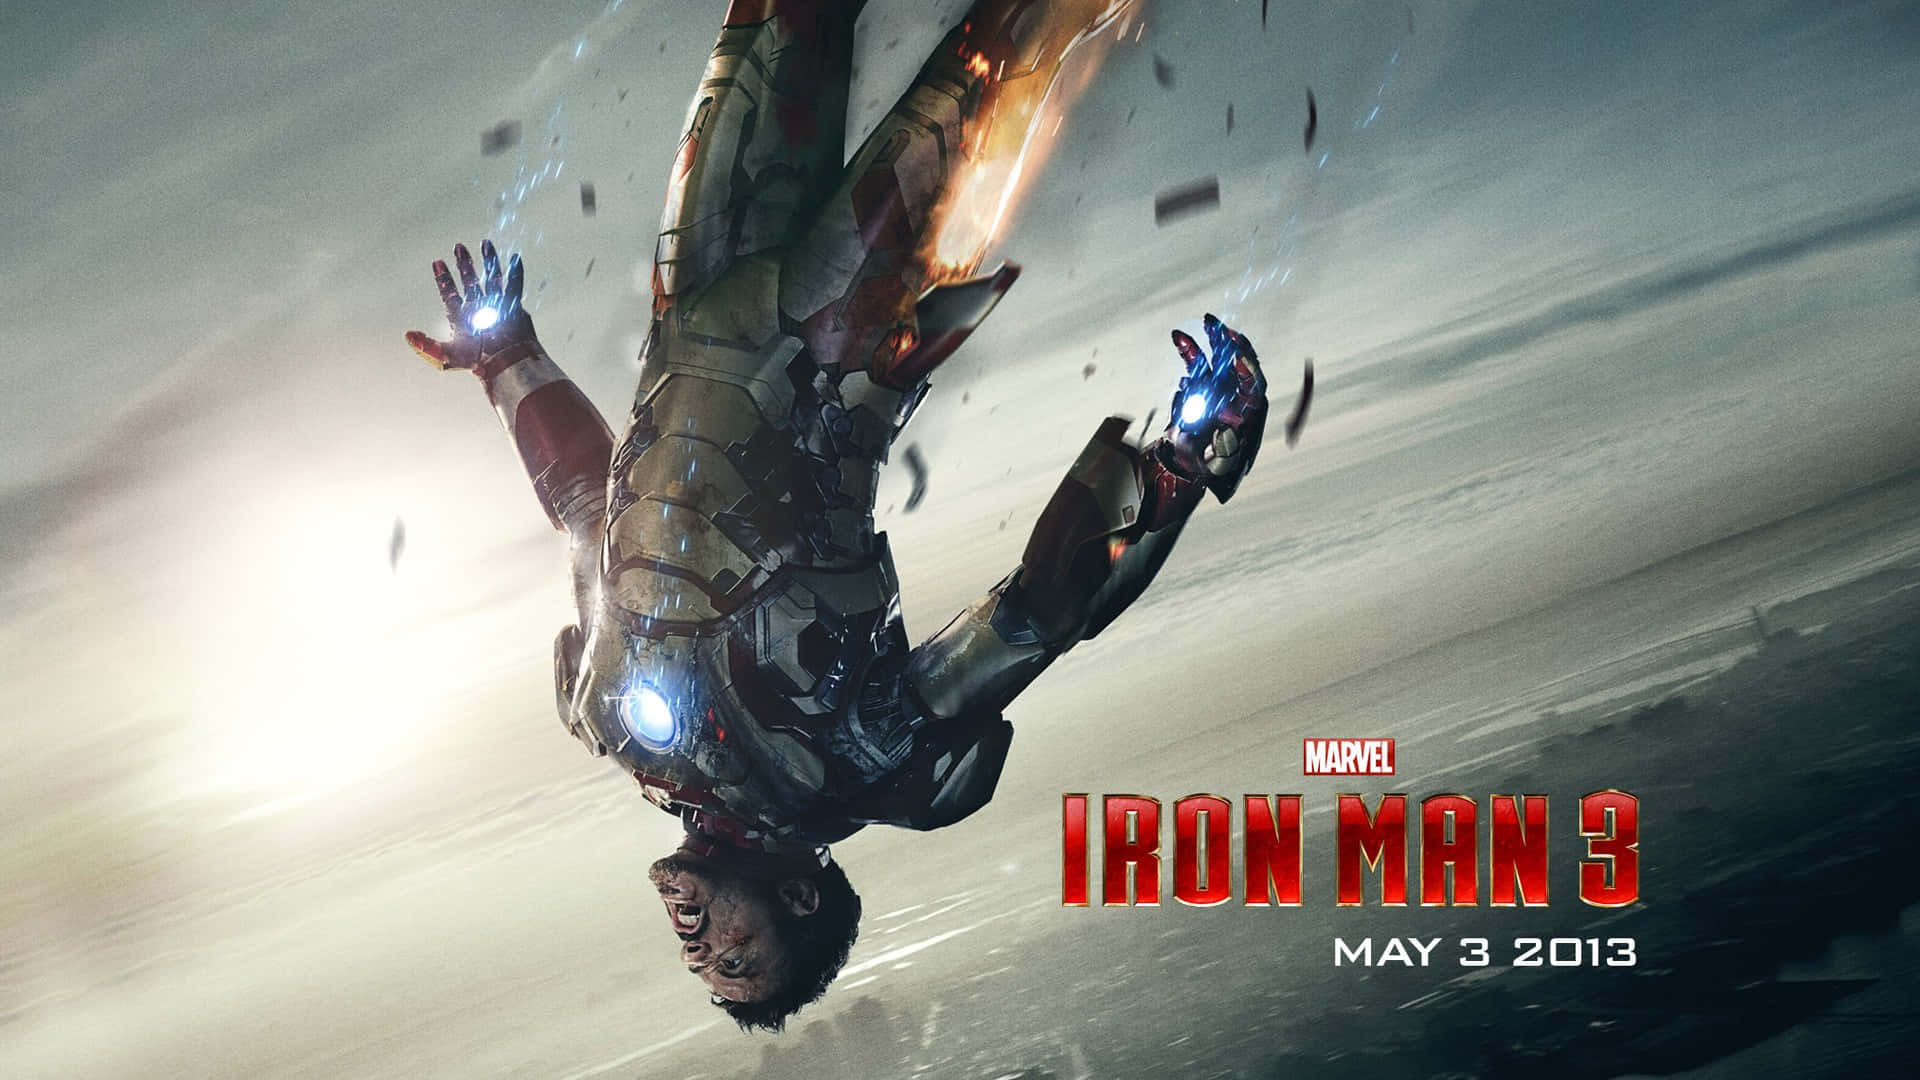 Robert Downey Jr As Iron Man In Iron Man 3